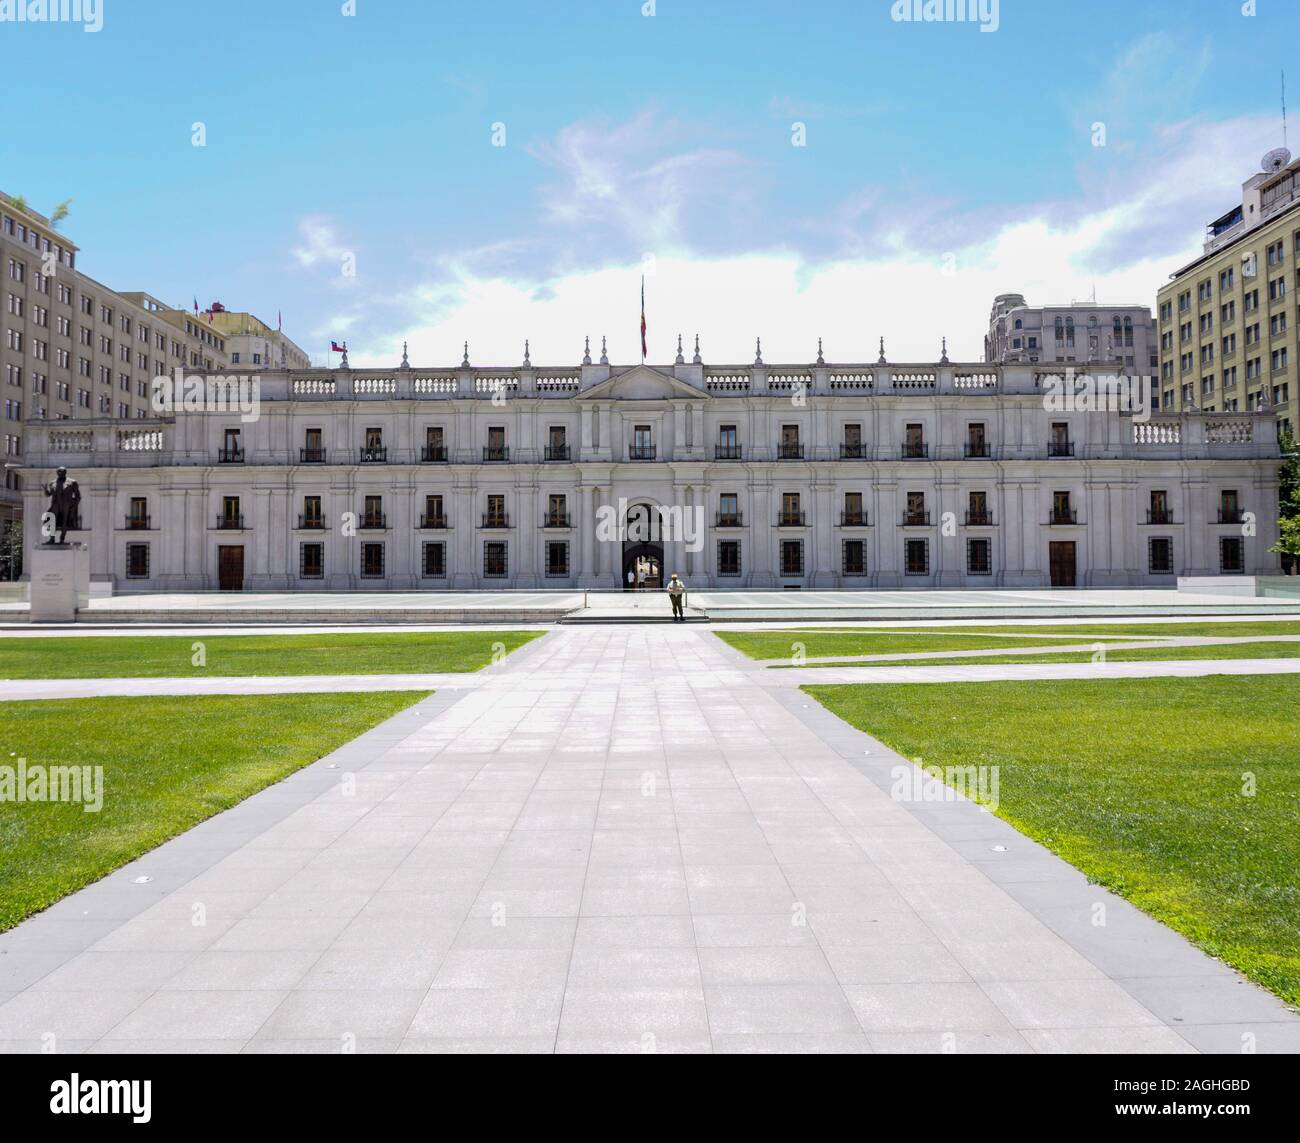 Plaza constitucion' located 1 block from the Palacio de la Moneda in Santiago de Chile Stock Photo